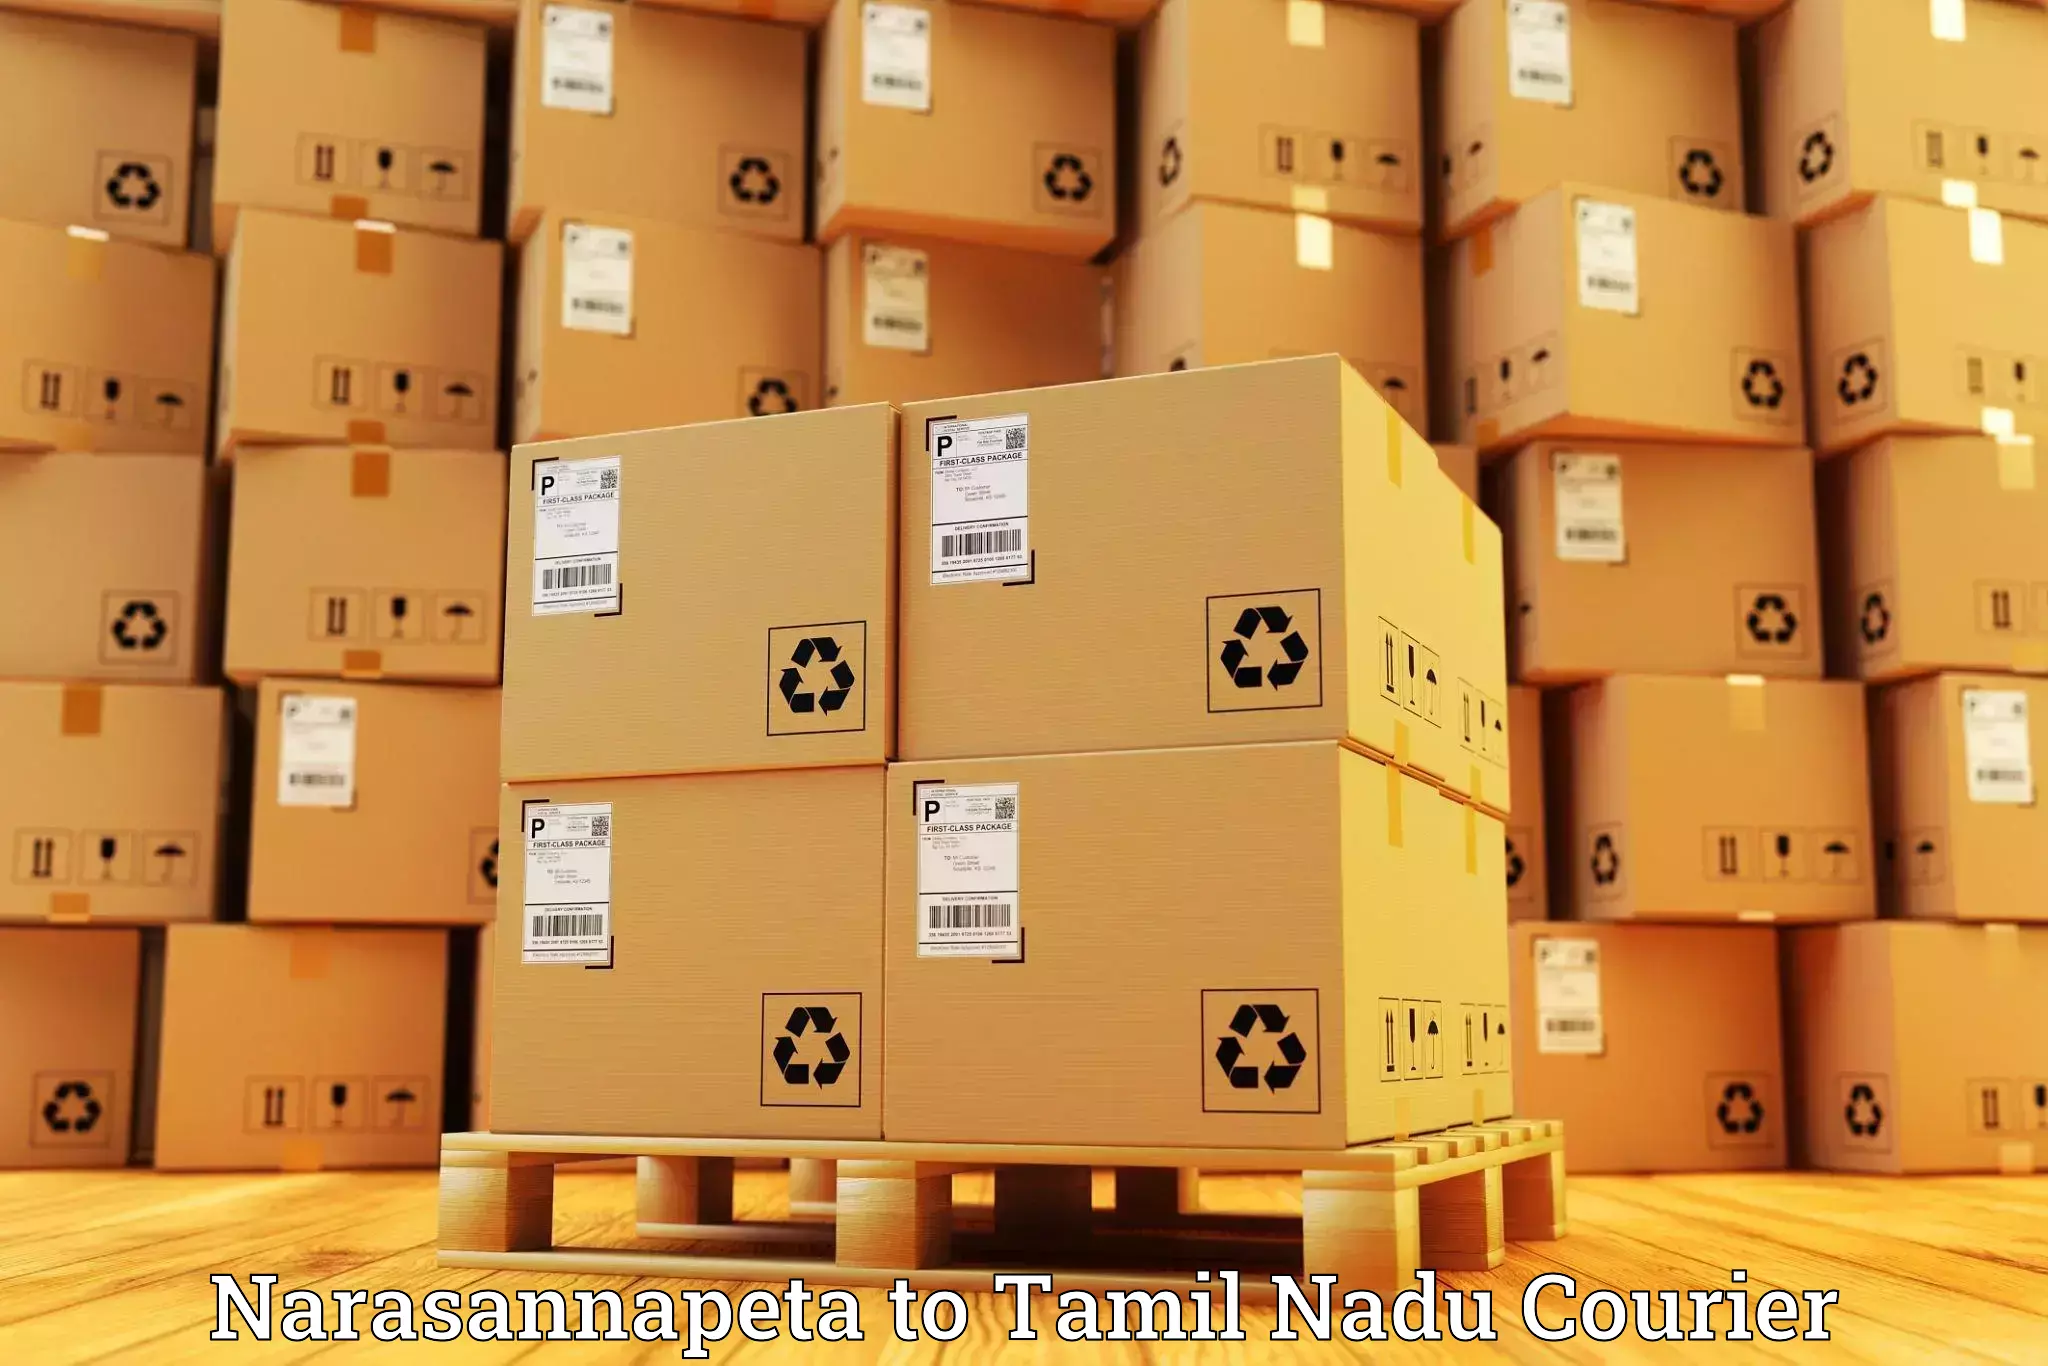 Global logistics network Narasannapeta to Viralimalai